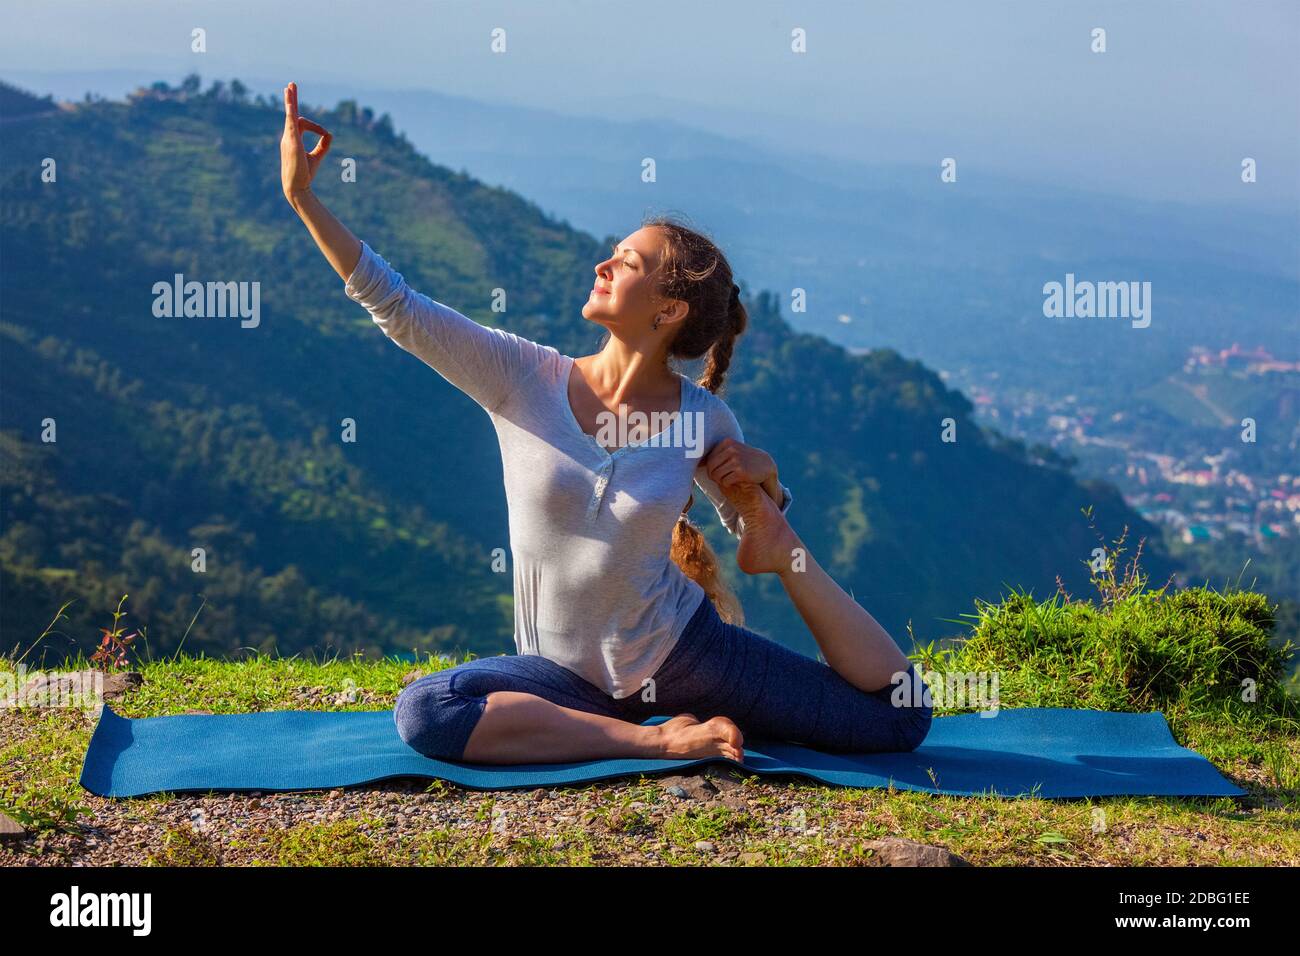 Yoga im Freien - junge sportliche fit Frau Stretching Yoga asana Eka pada rajakapotasana - einbeinige Königstaube Pose in Himalaya Berge, Indien Stockfoto